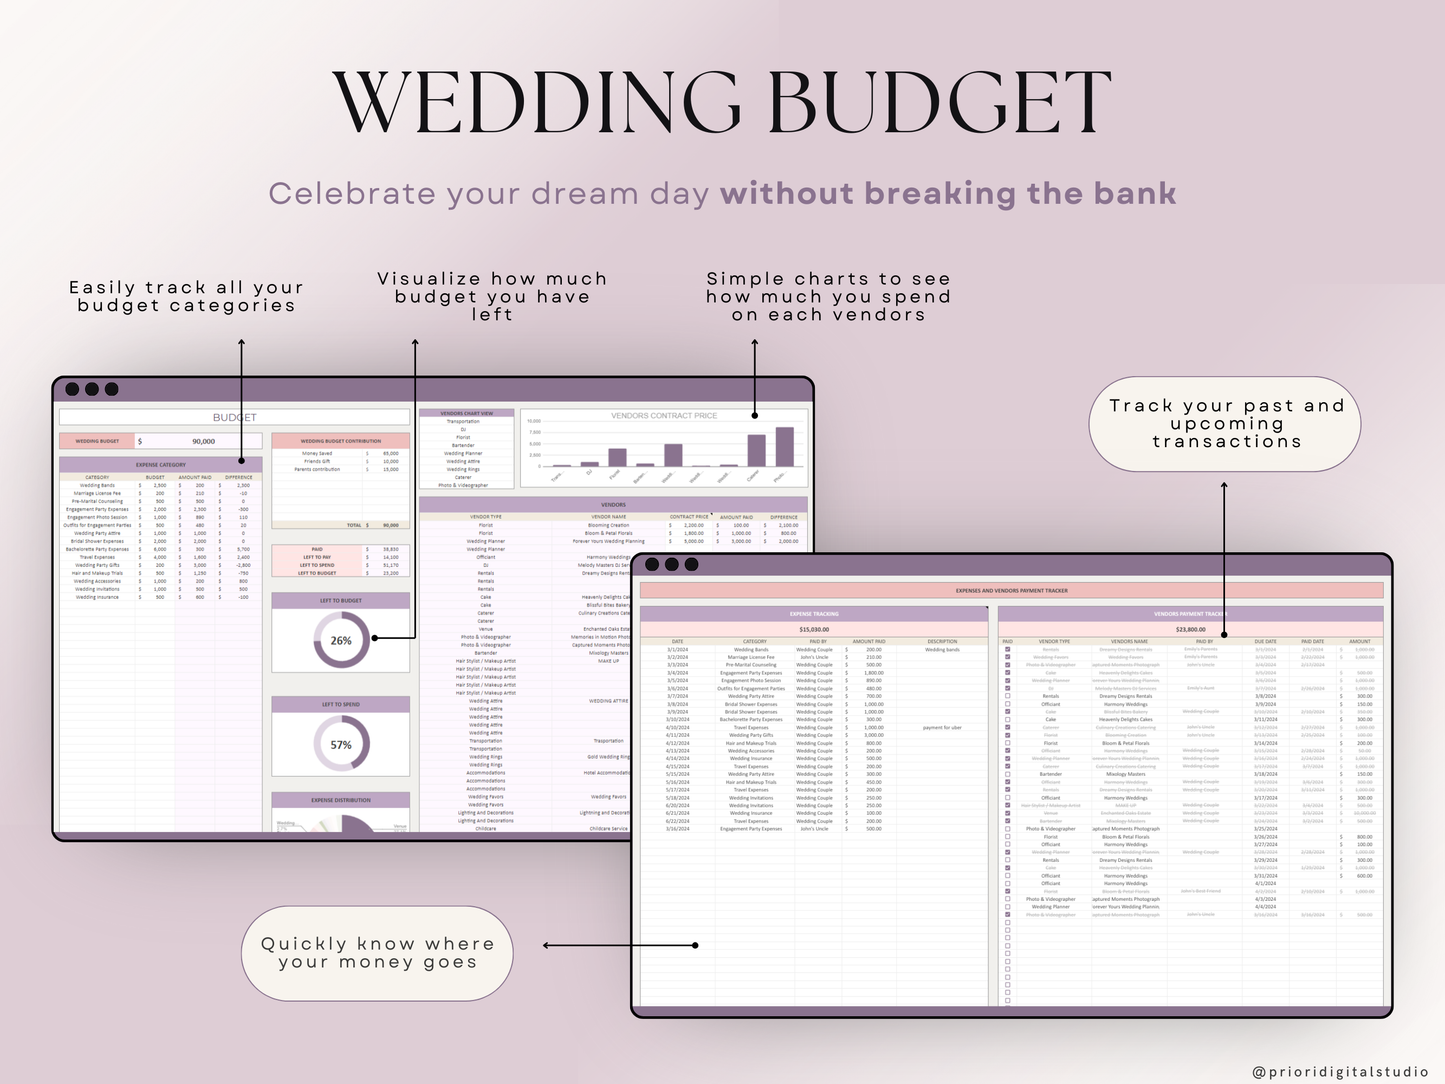 Wedding Planner Spreadsheet Wedding Budget Tracker Honeymoon Planner Checklist Guest List Tracker Wedding Travel Itinerary Seating Plan